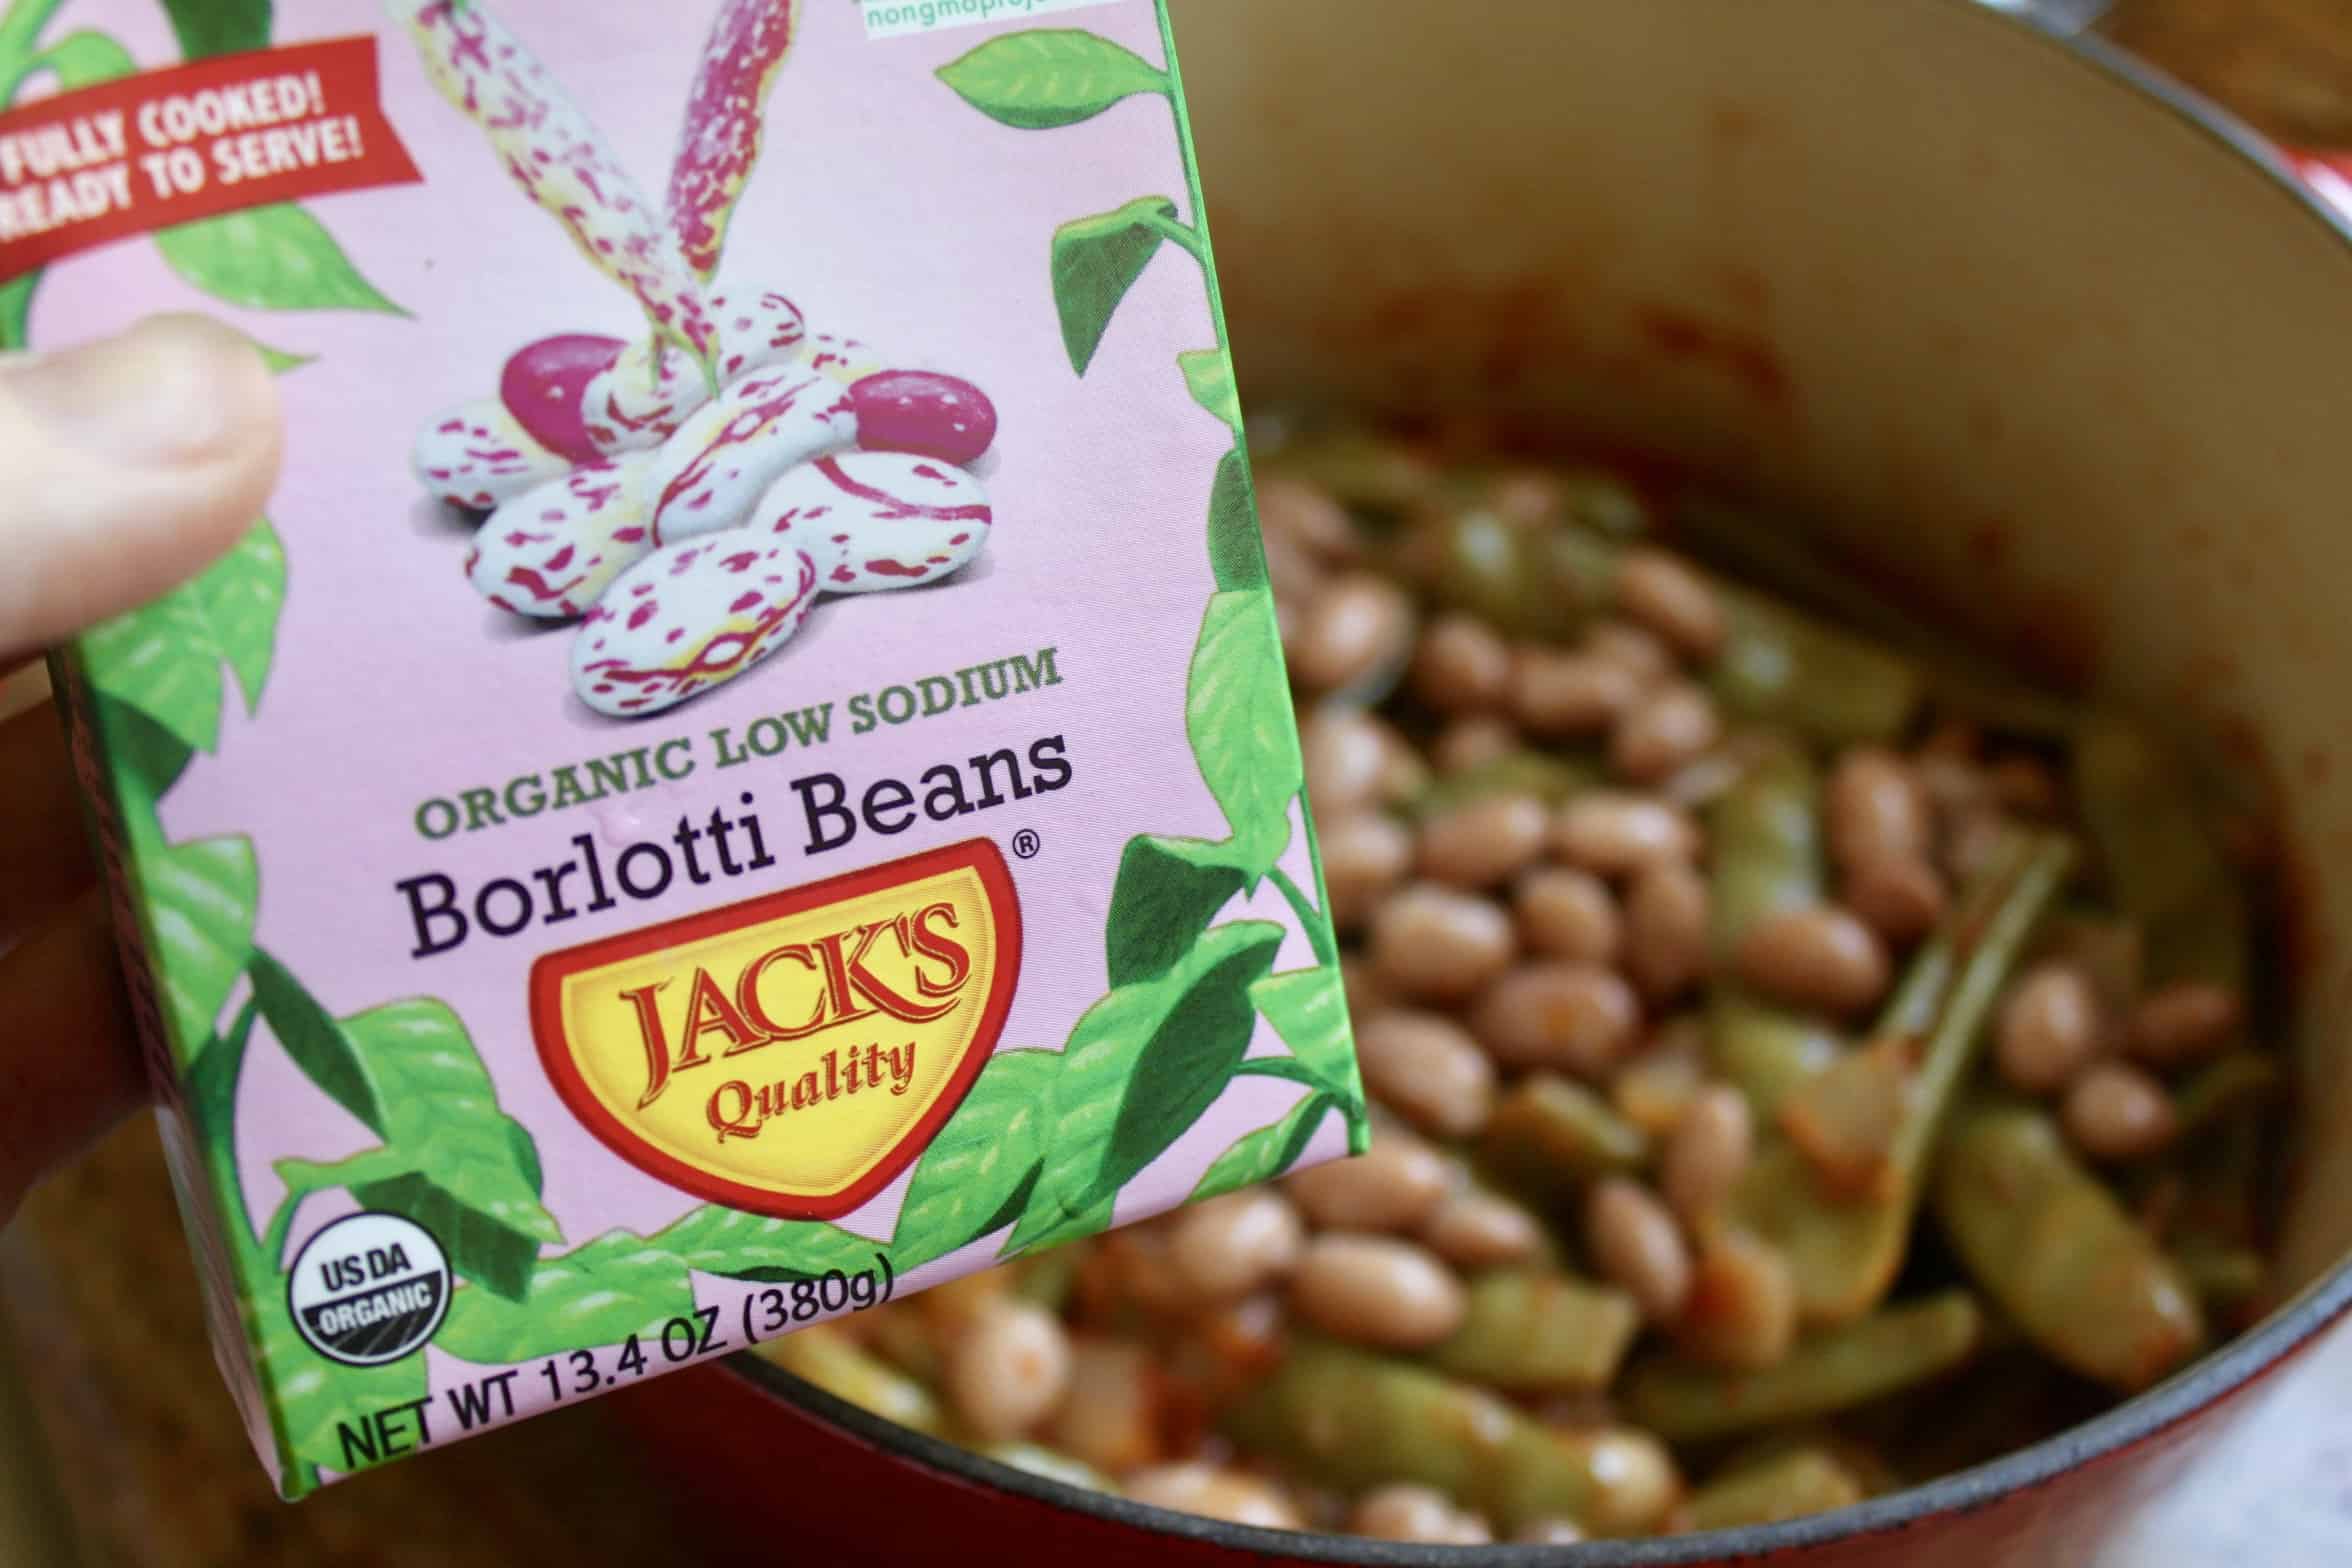 Jack's Borlotti beans with pot below